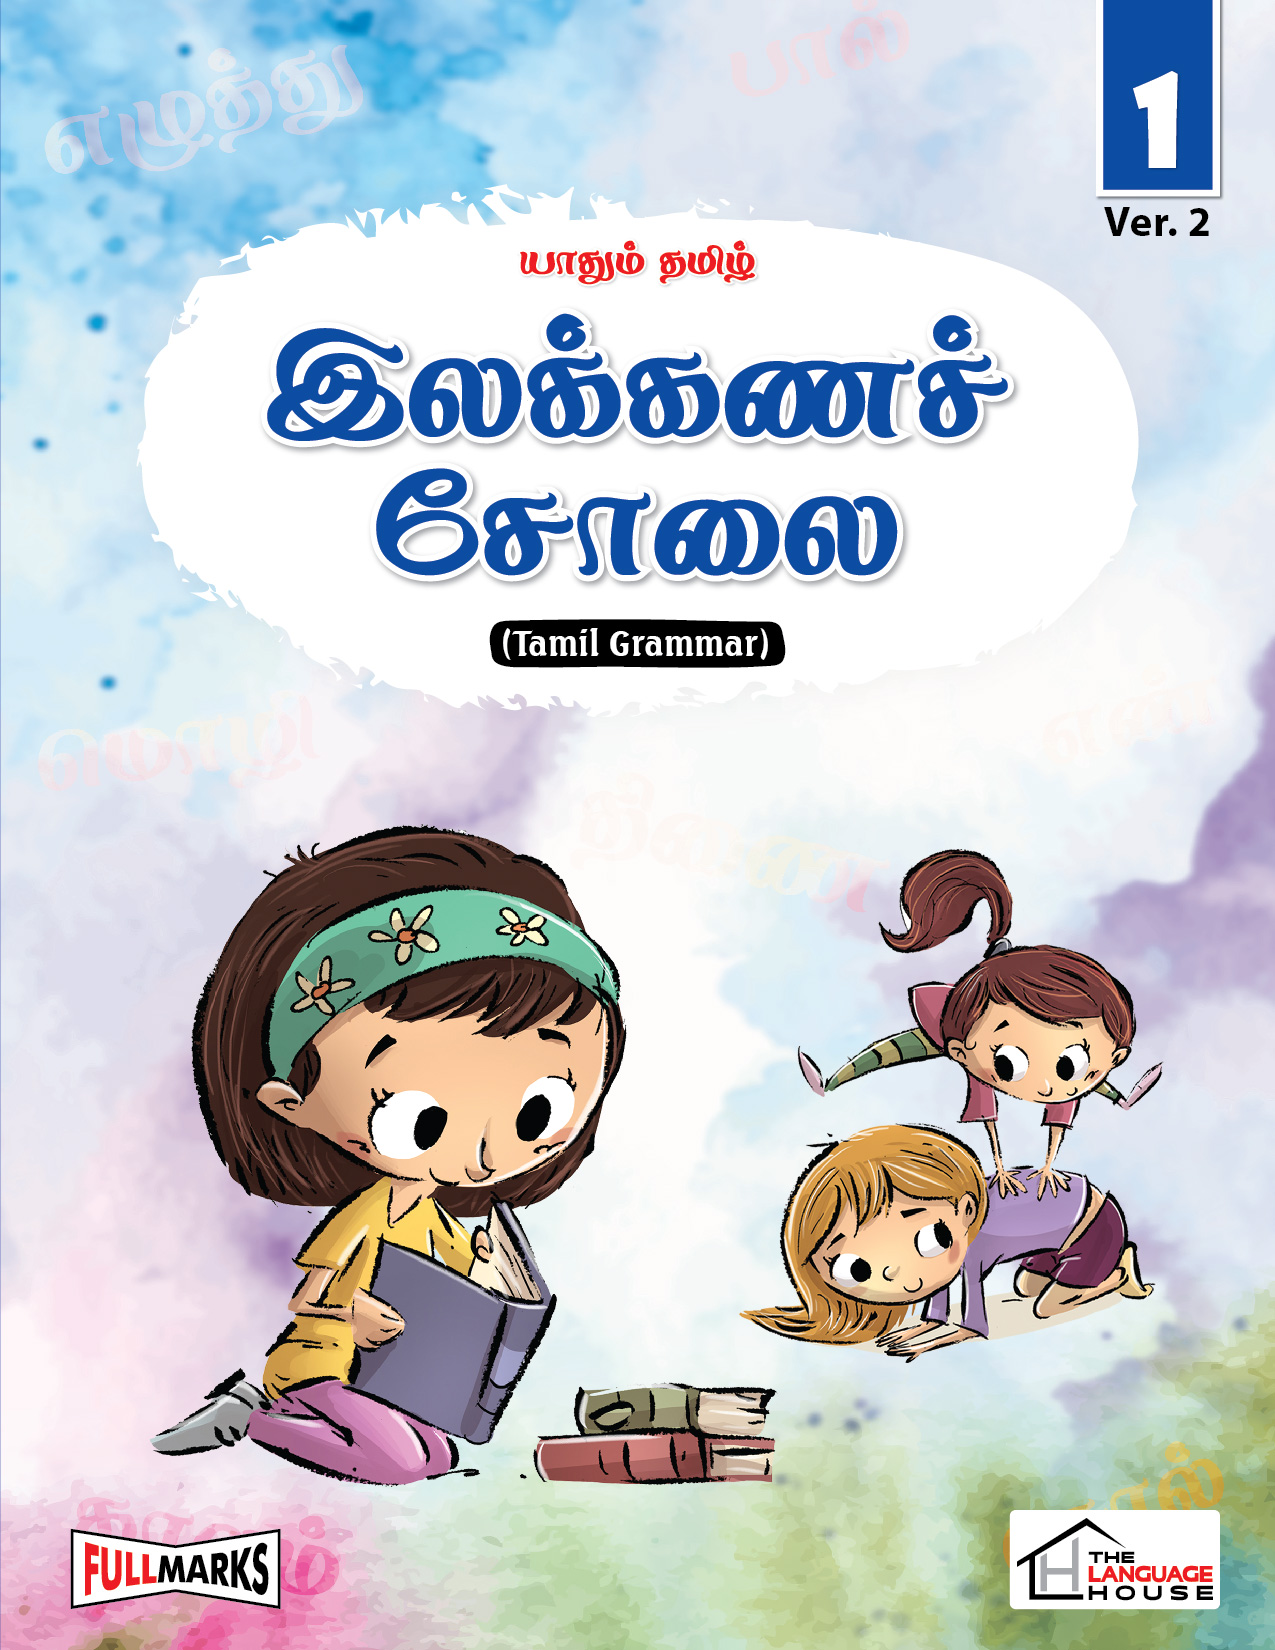 Tamil Grammar Ver. 2 Class 1